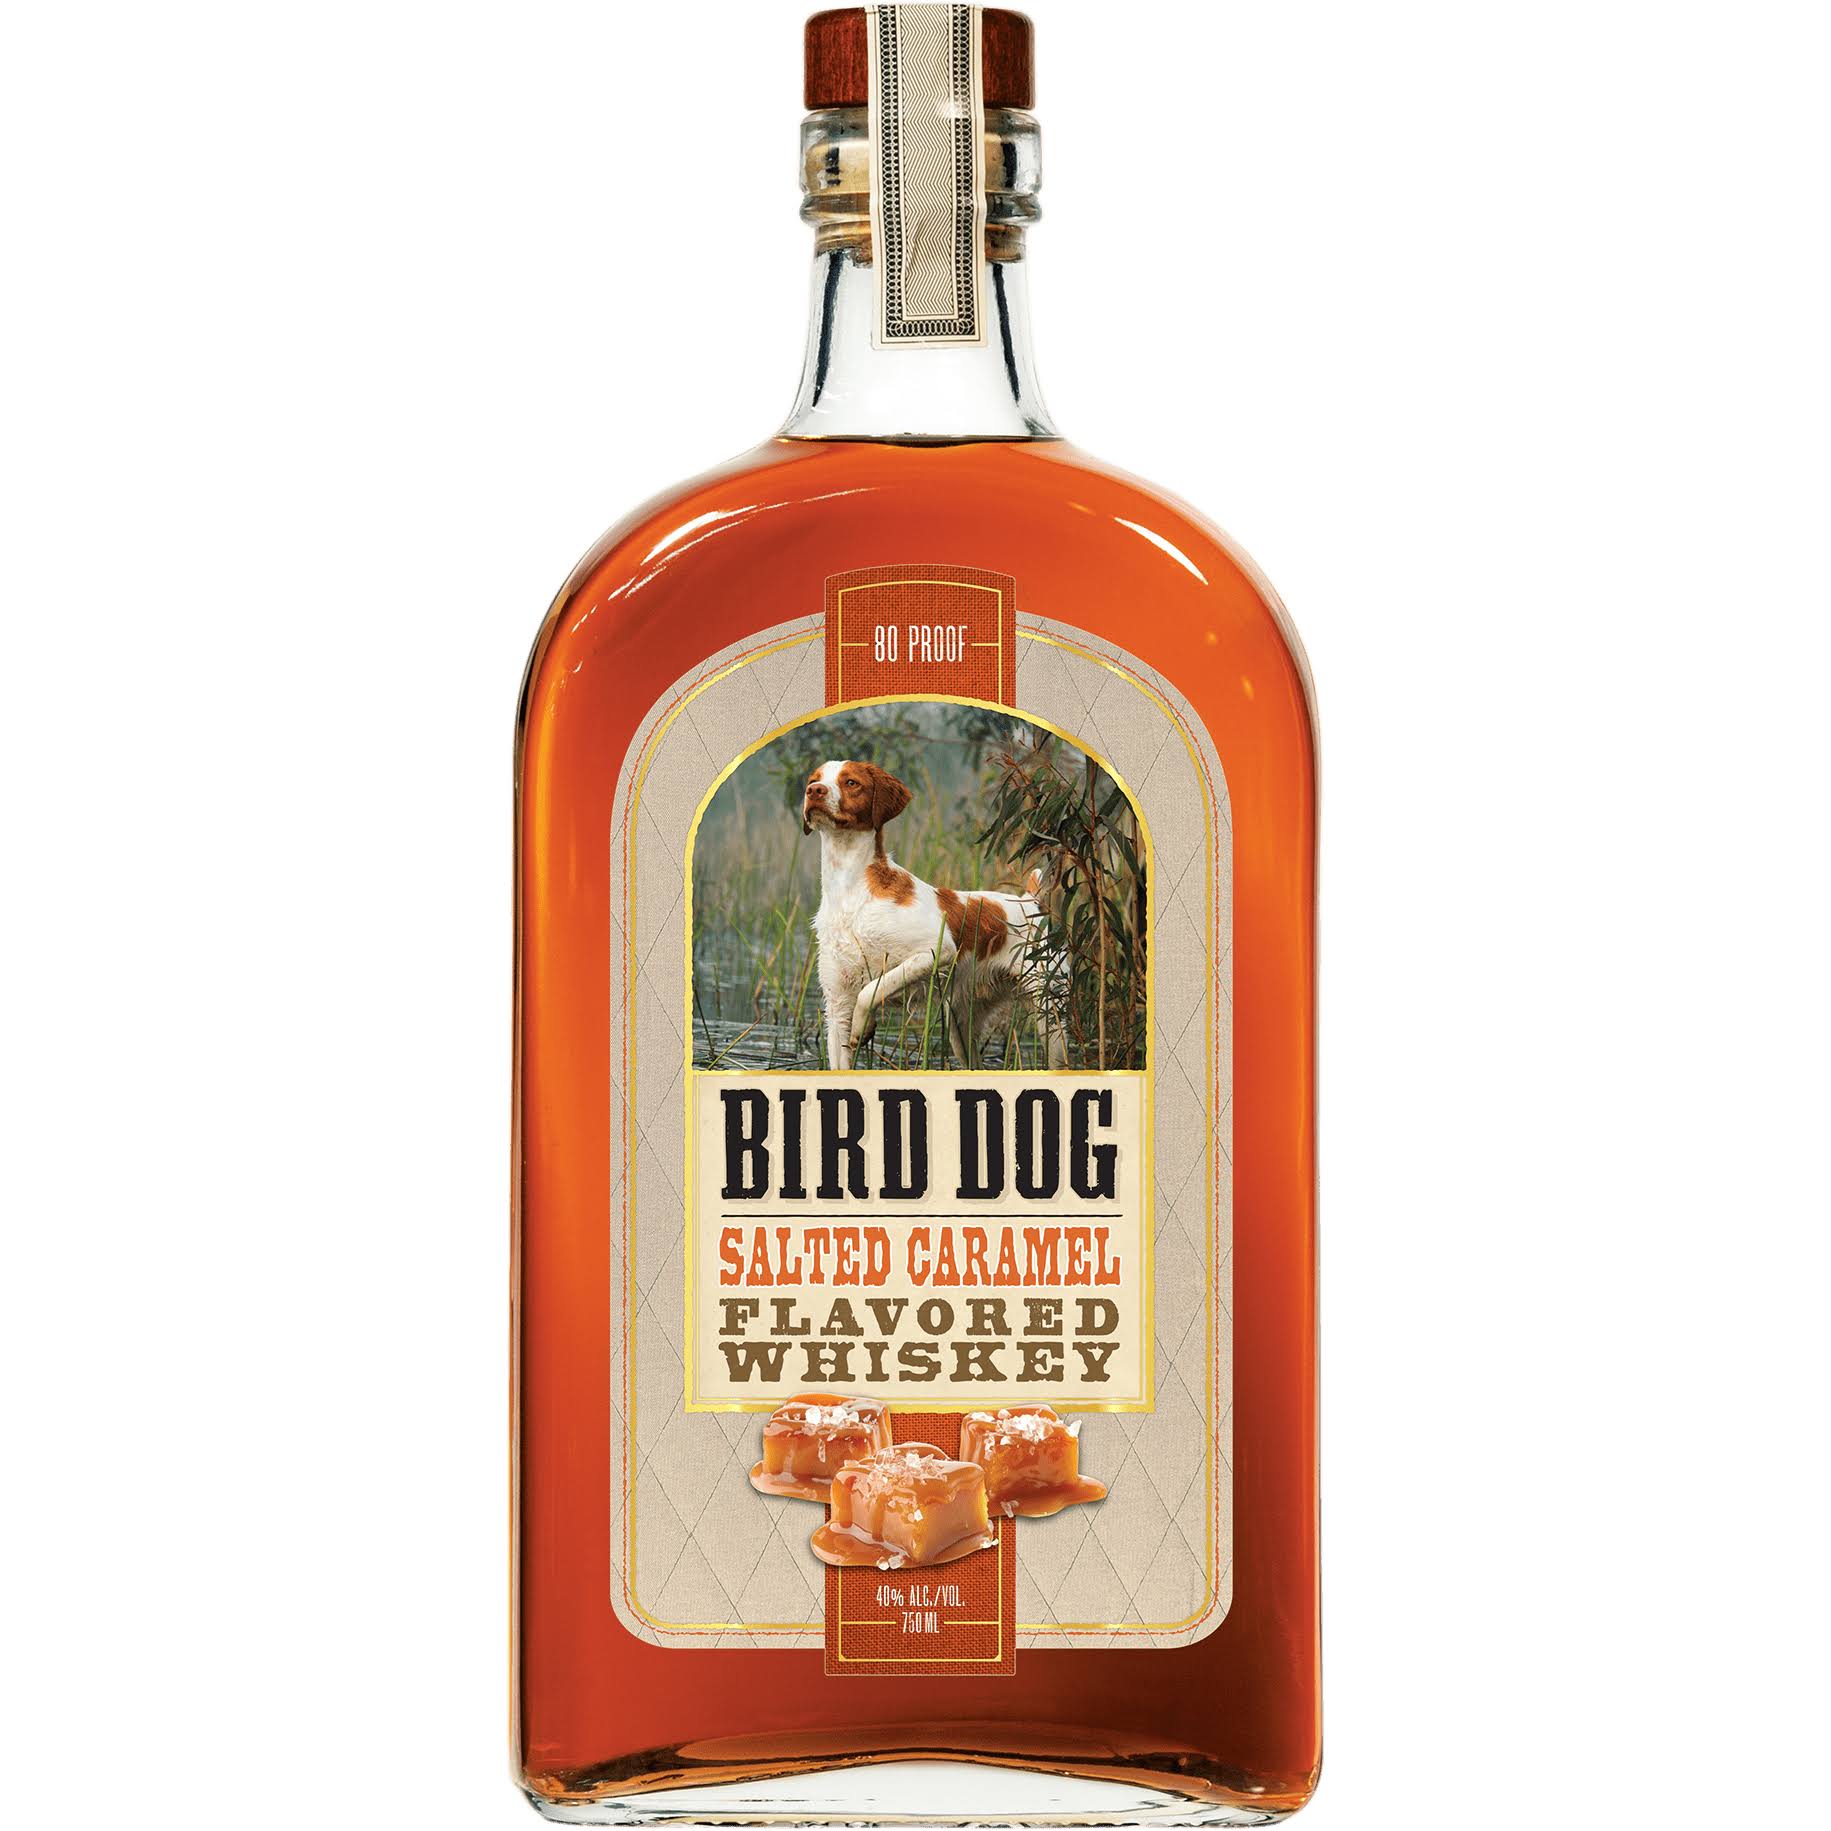 Bird Dog Whiskey, Salted Caramel Flavored - 750 ml